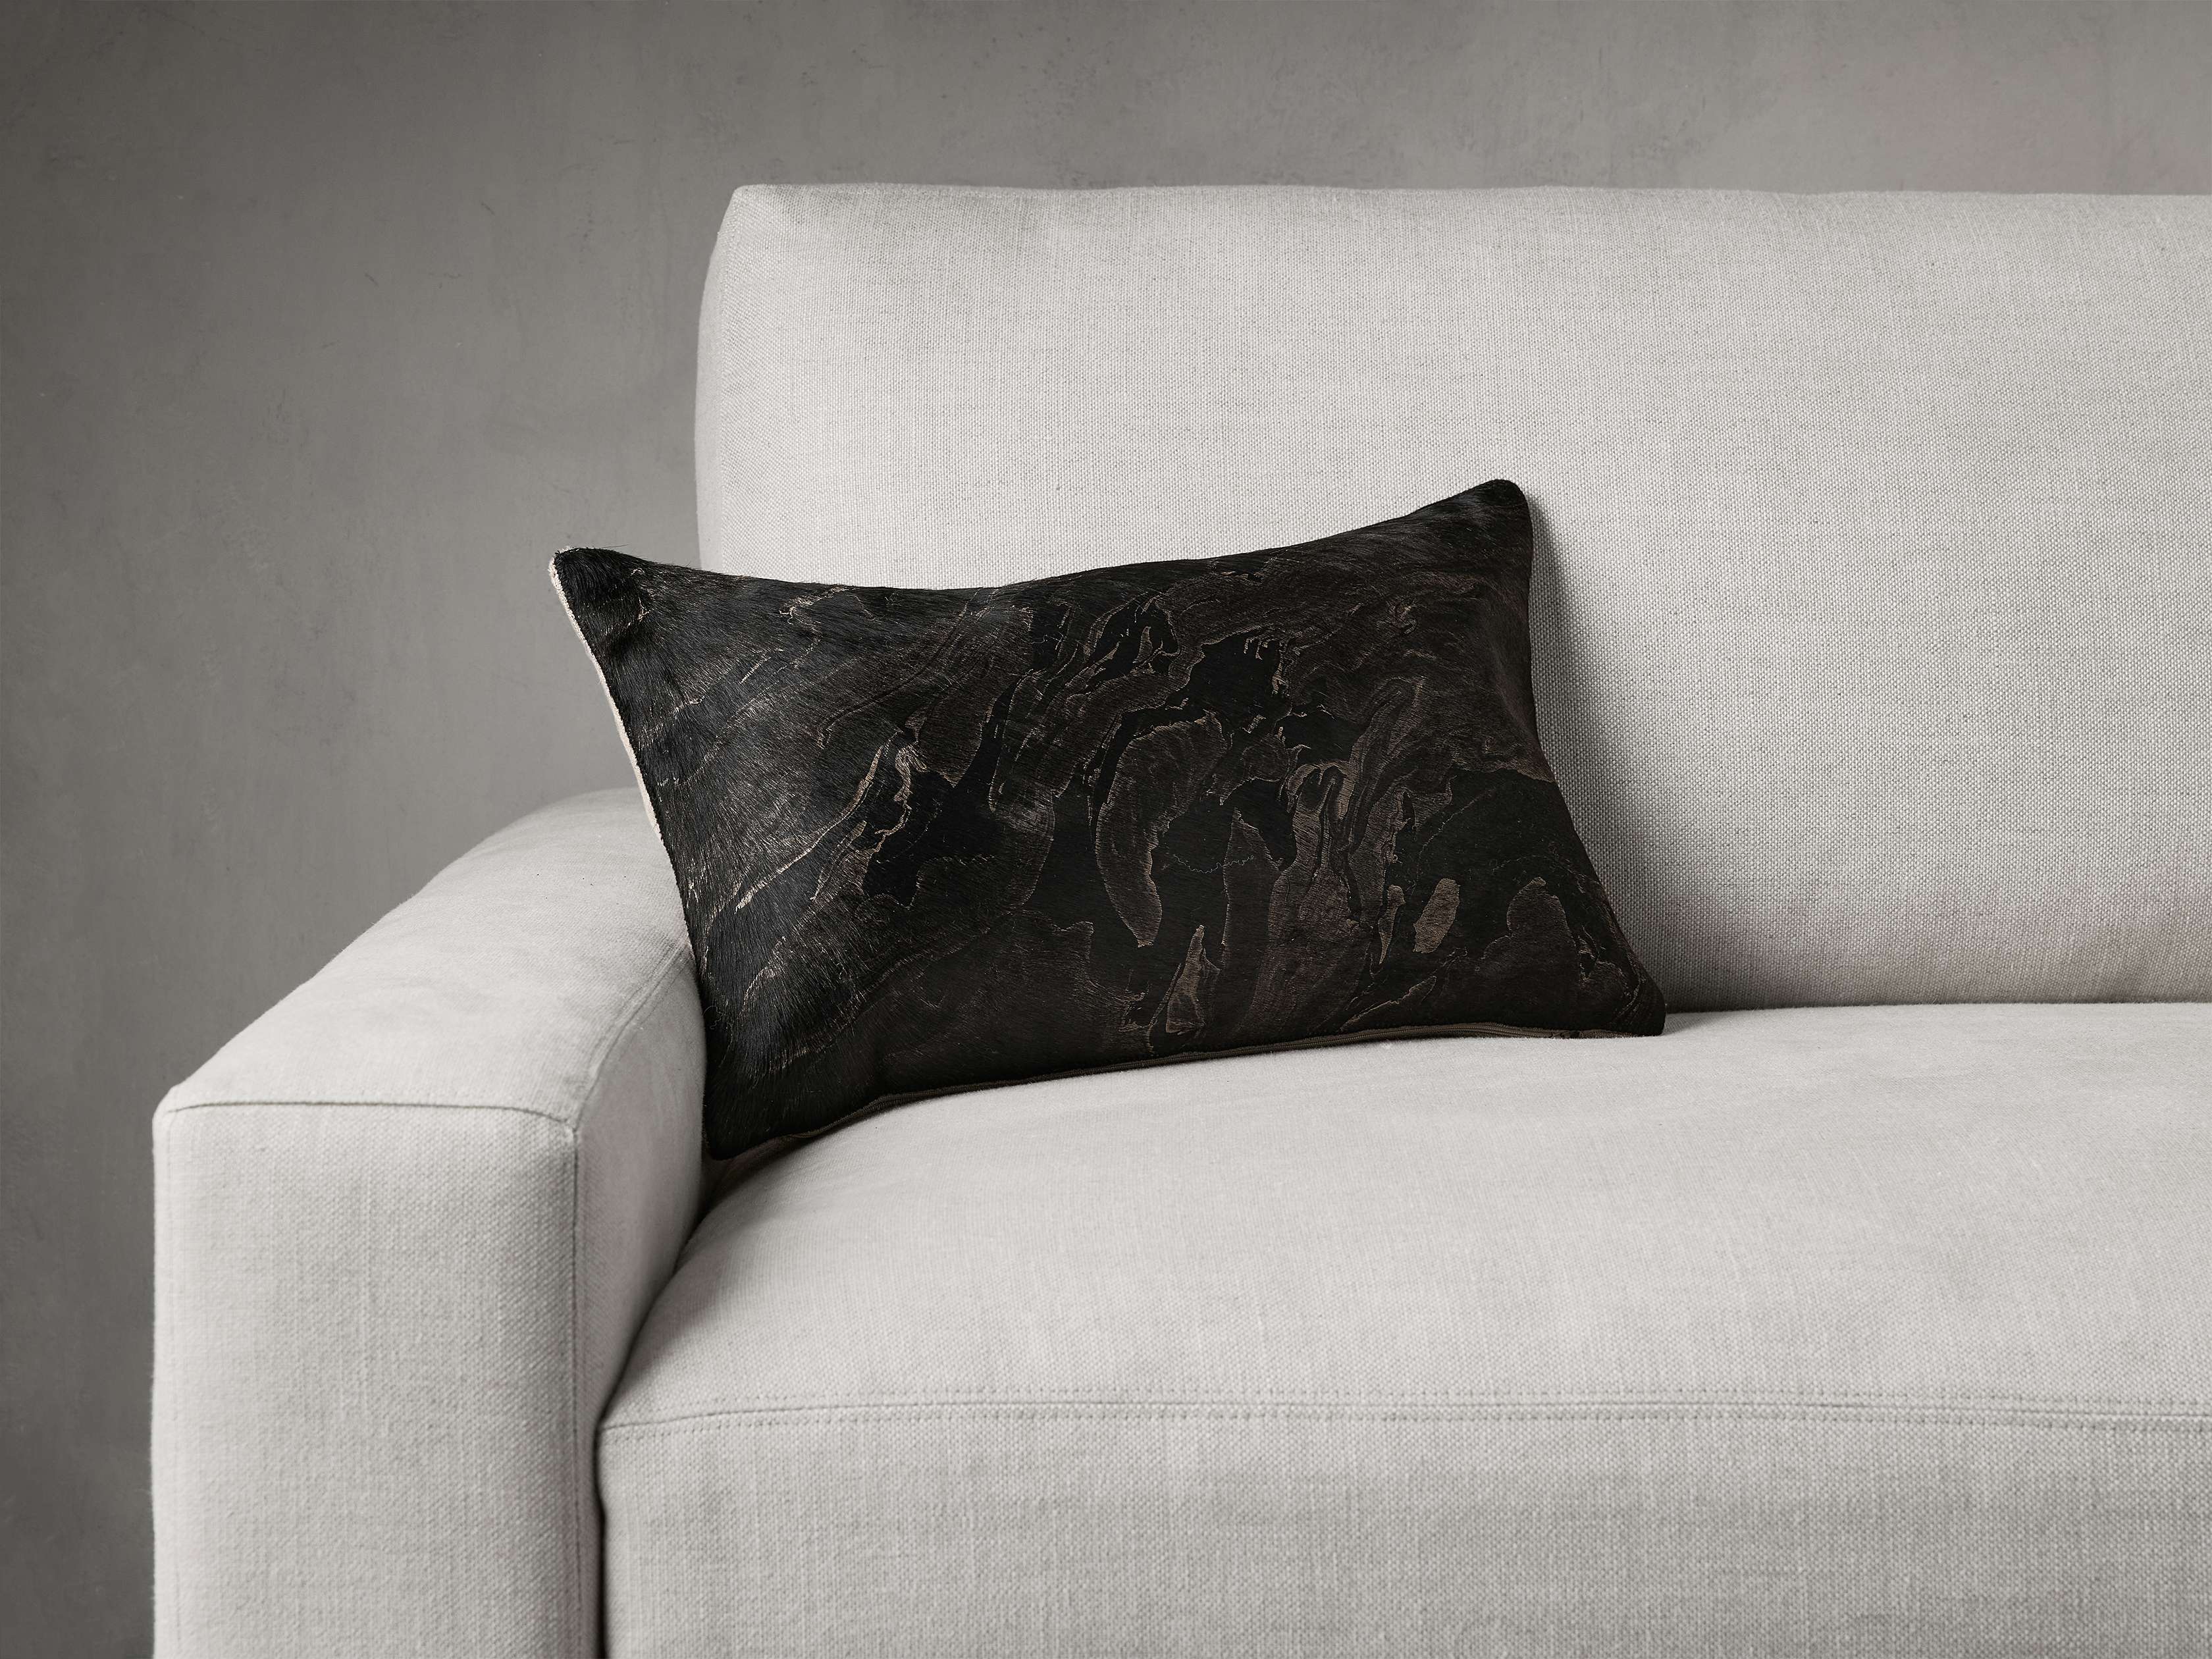 velvet lumbar pillow - 4 colors available!